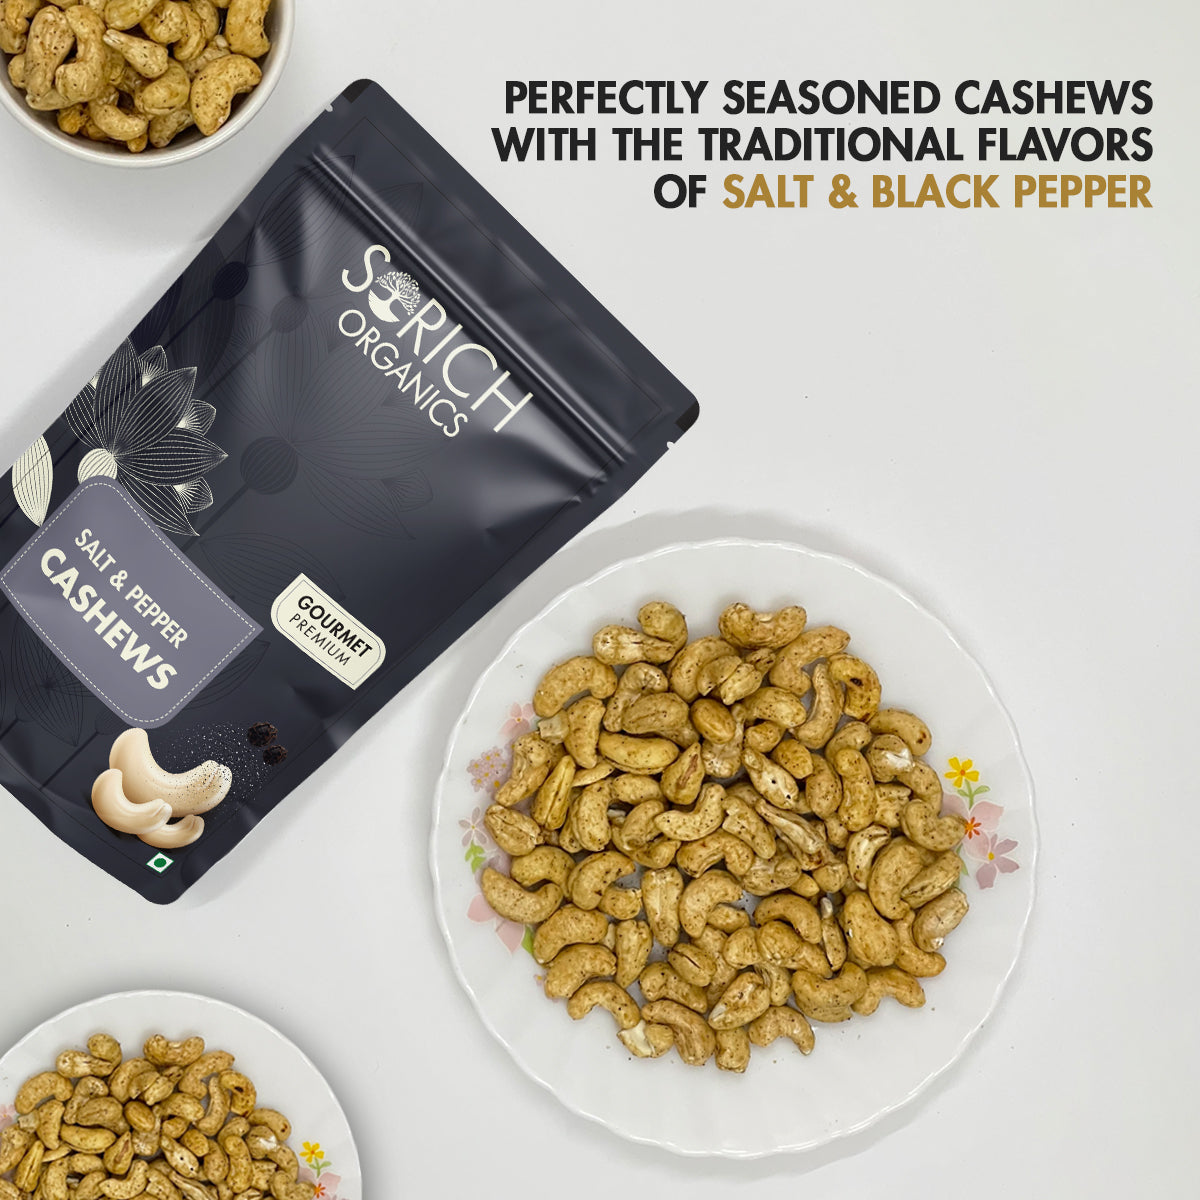 Salted & Black Pepper Cashew - Sorich